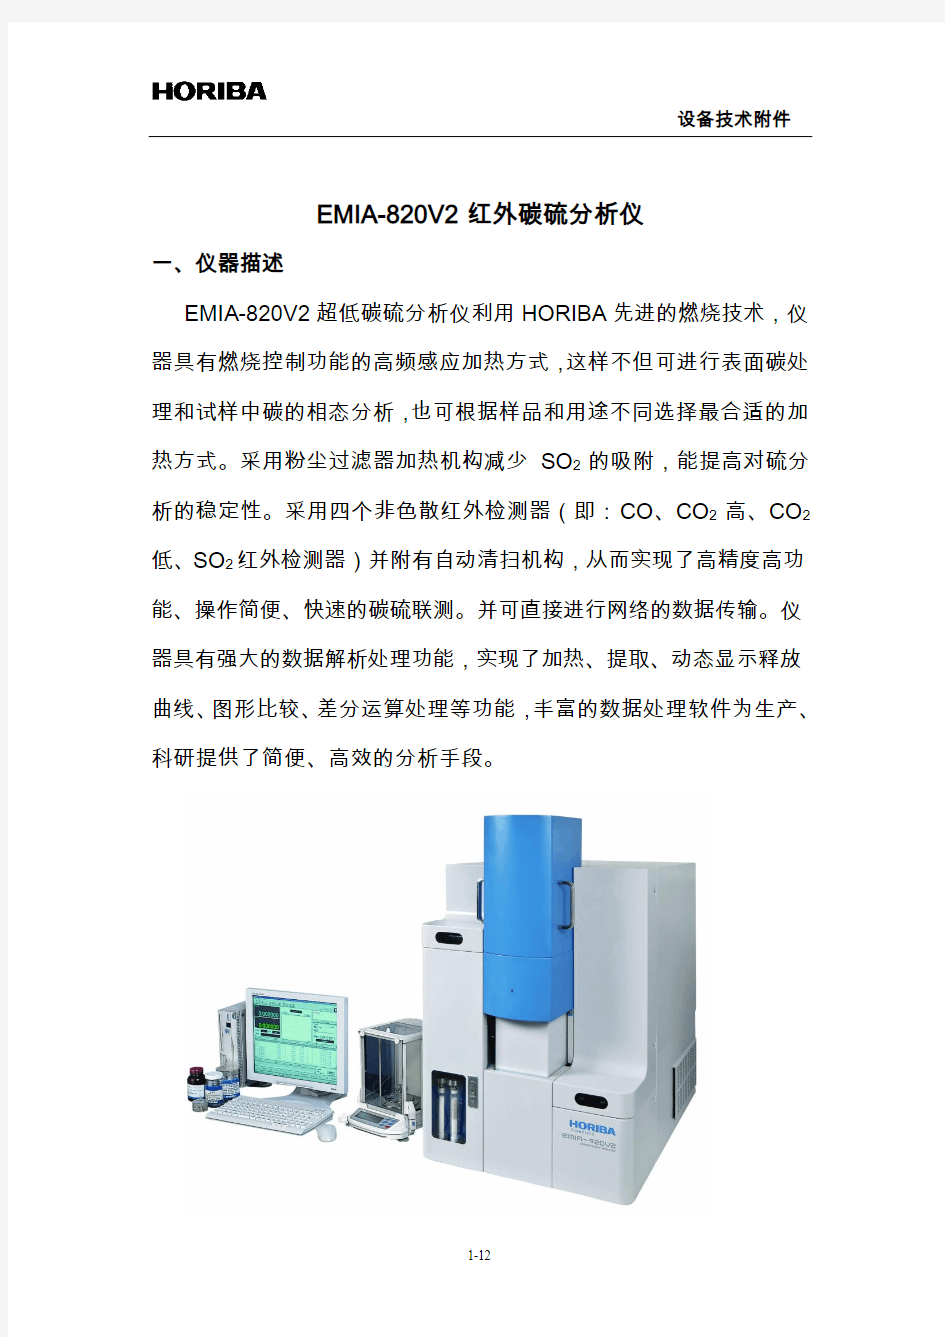 EMIA-820V红外碳硫分析仪